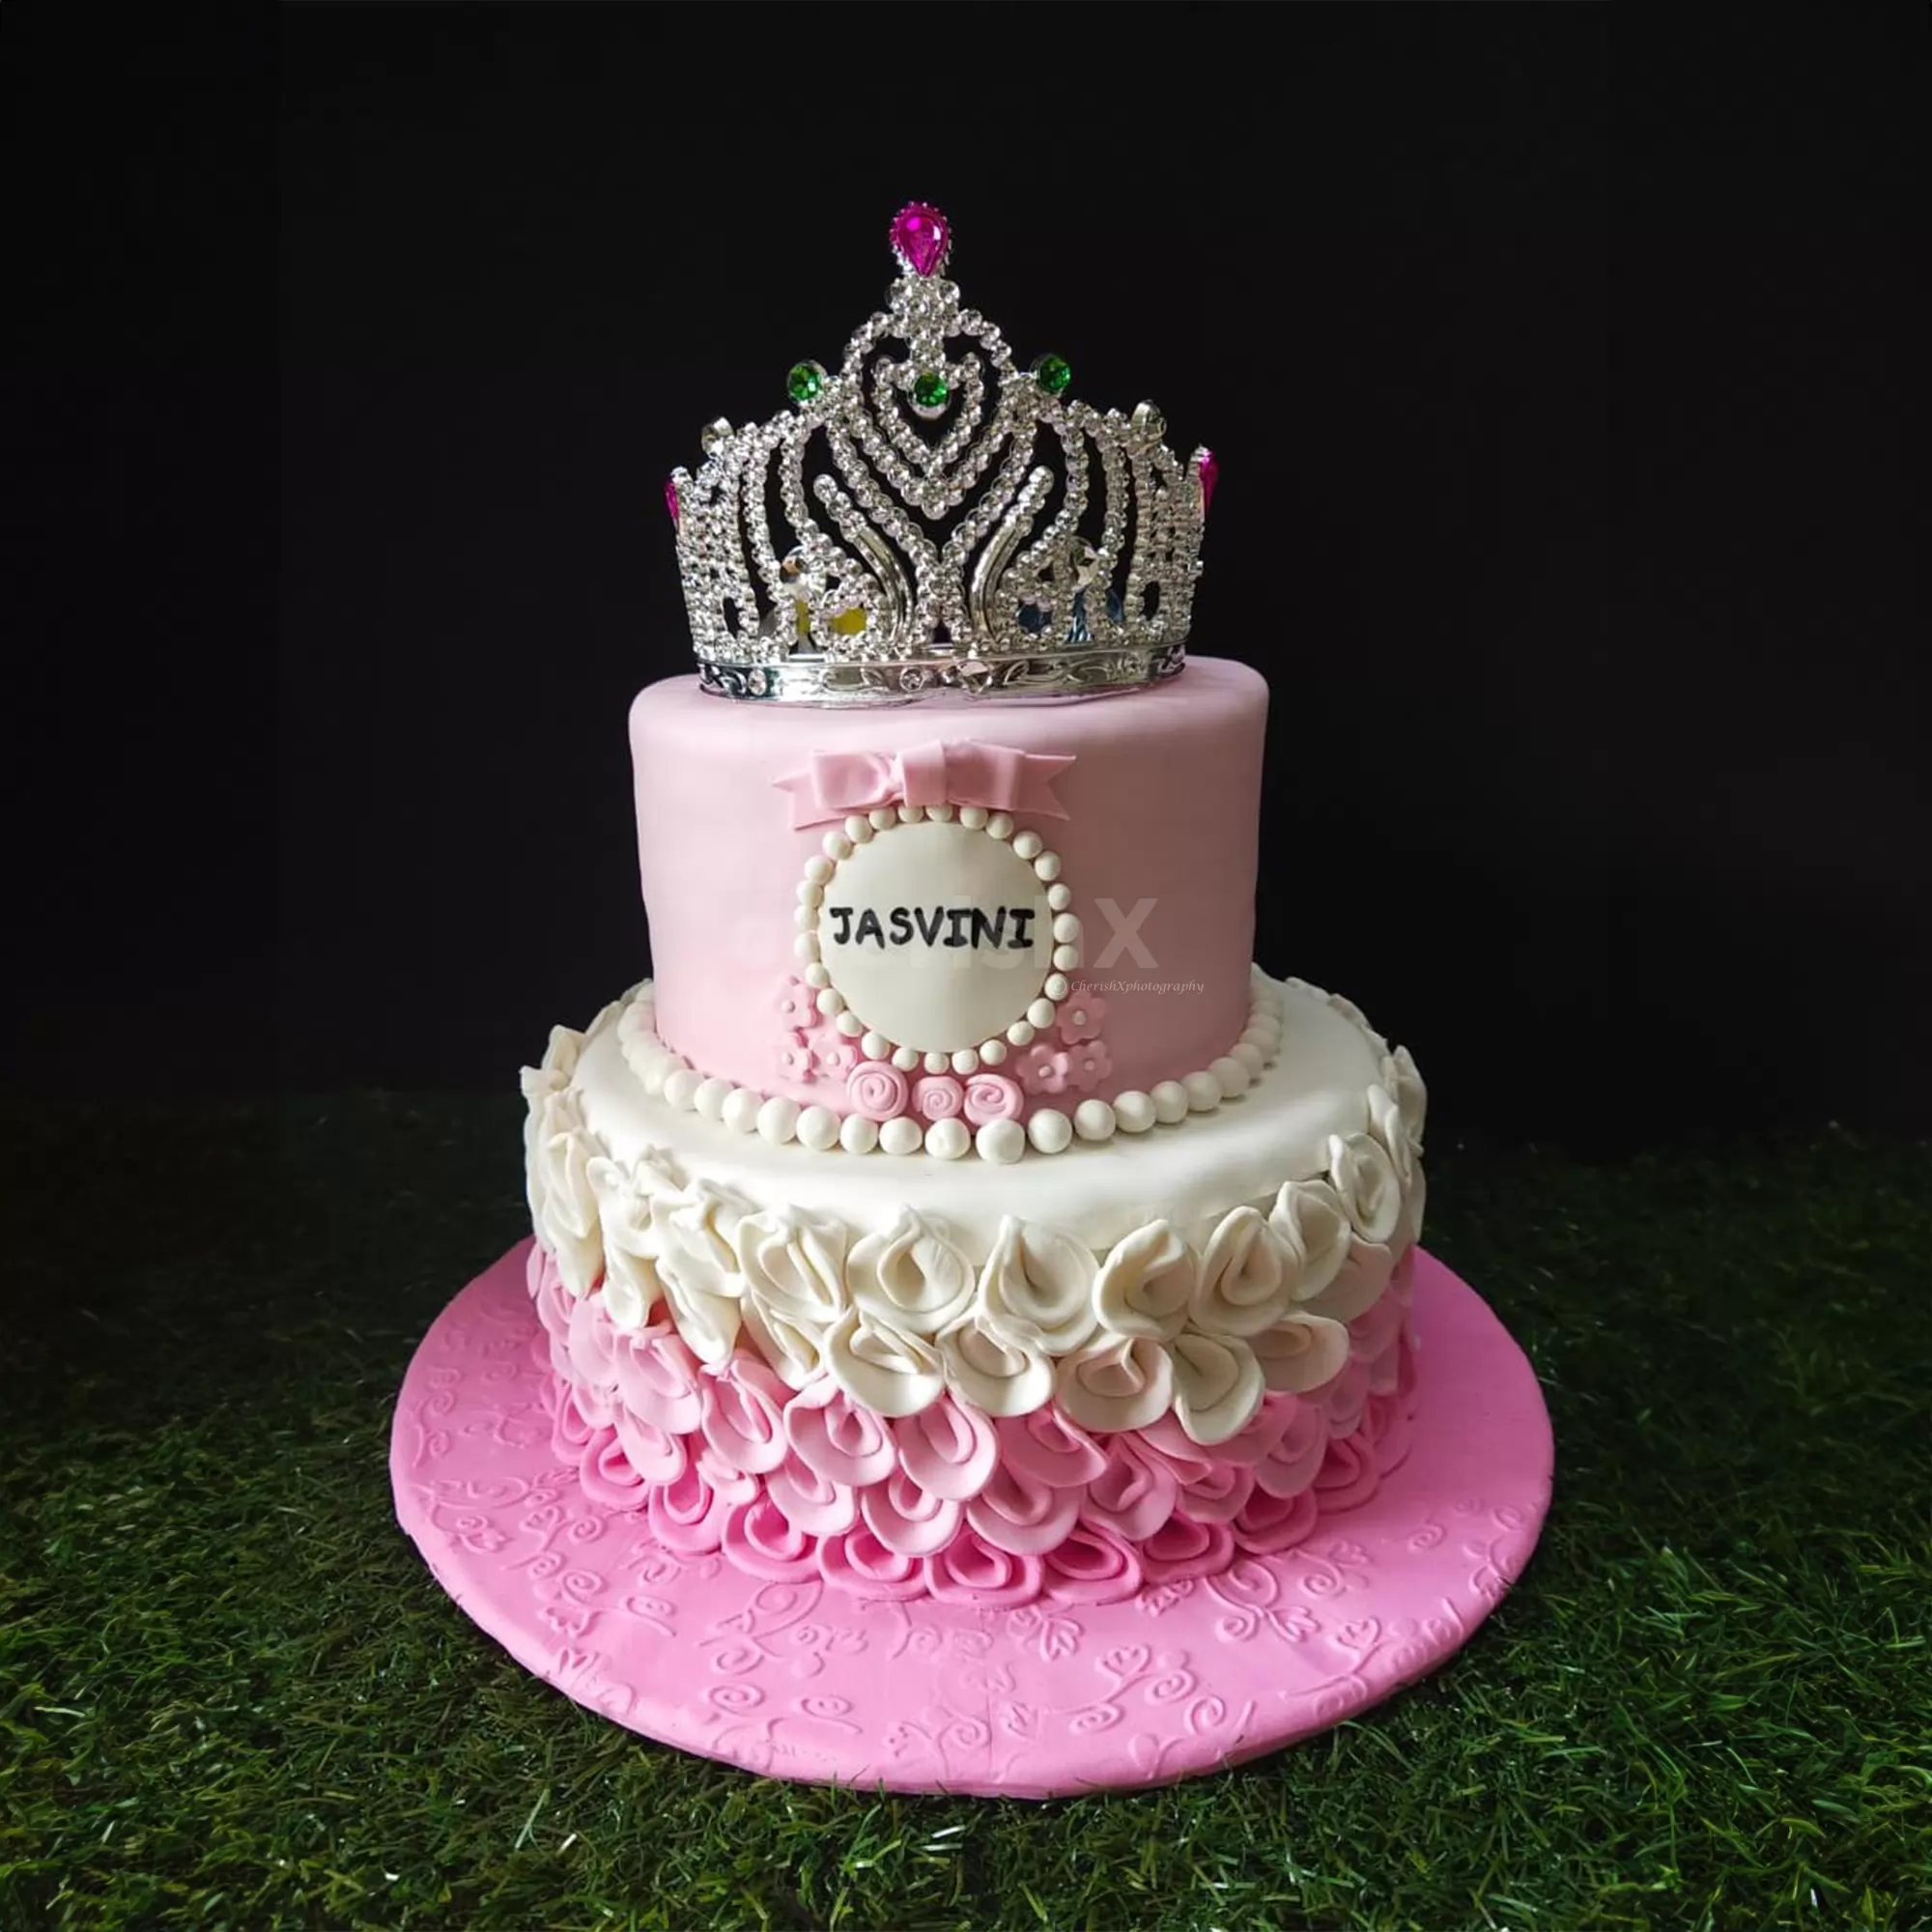 5 Impressive Birthday Cakes for your Kids Birthday Party | FlowerAura